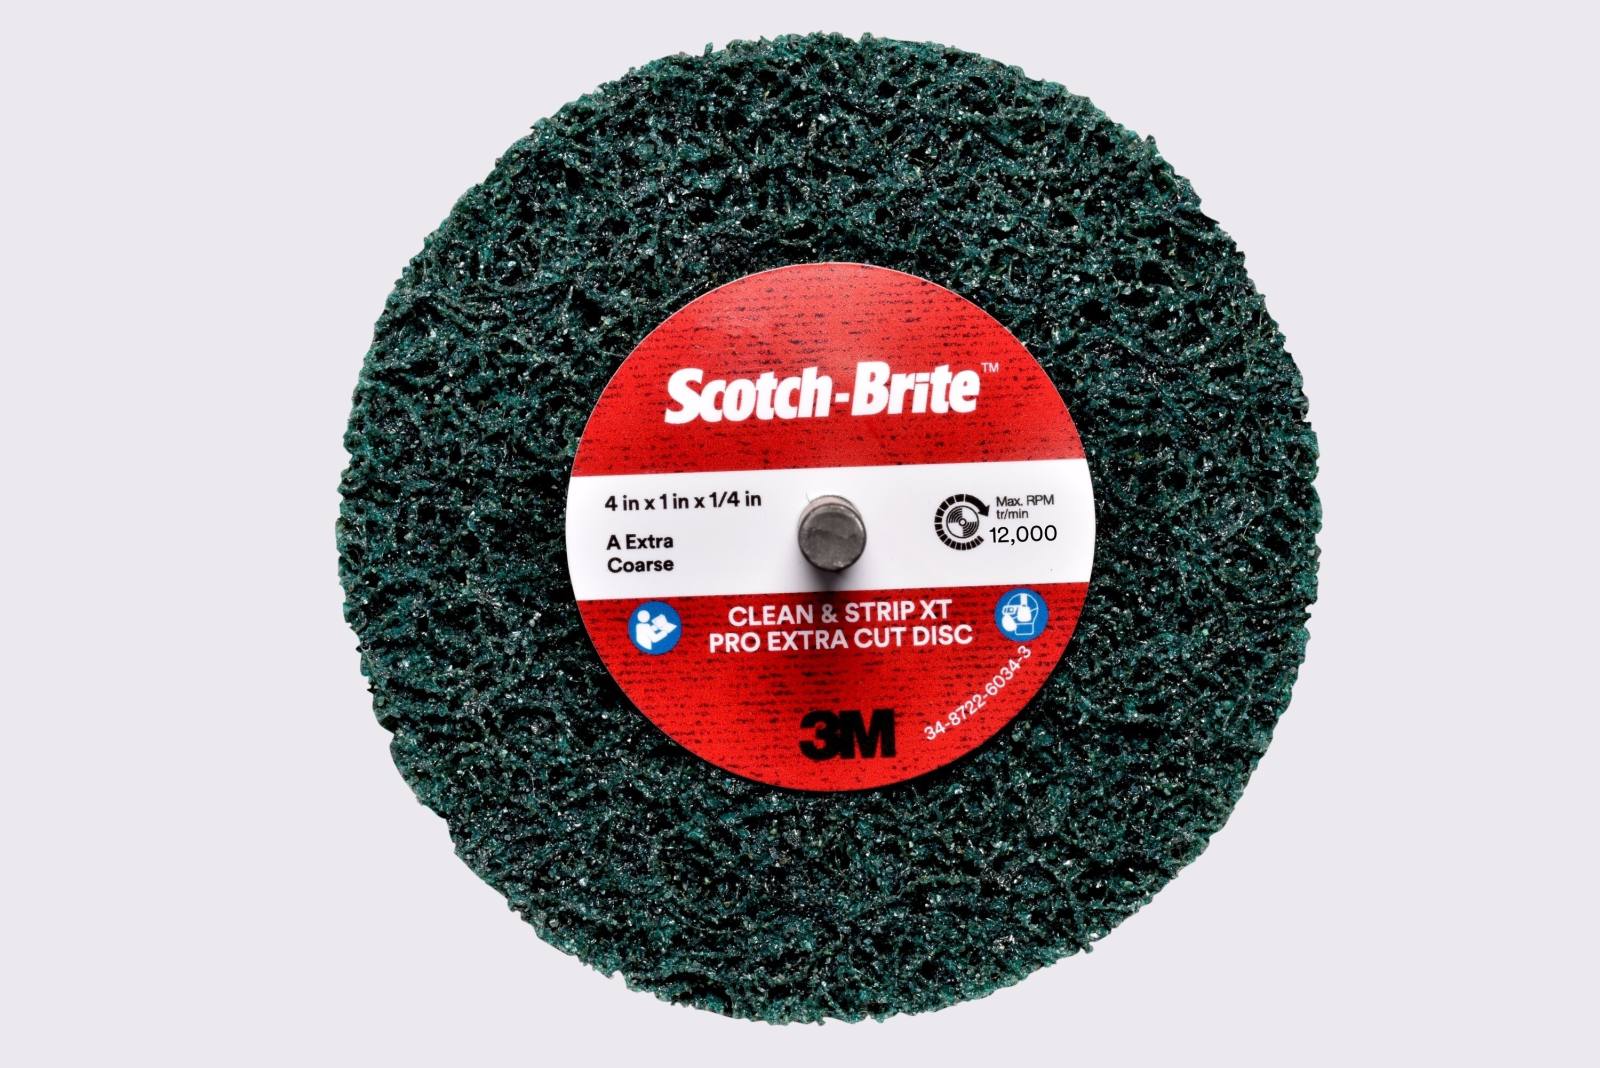 3M Scotch-Brite coarse cleaning disc XT-ZS Pro Extra Cut, 75 mm, 25 mm, 6 mm, A, extra coarse